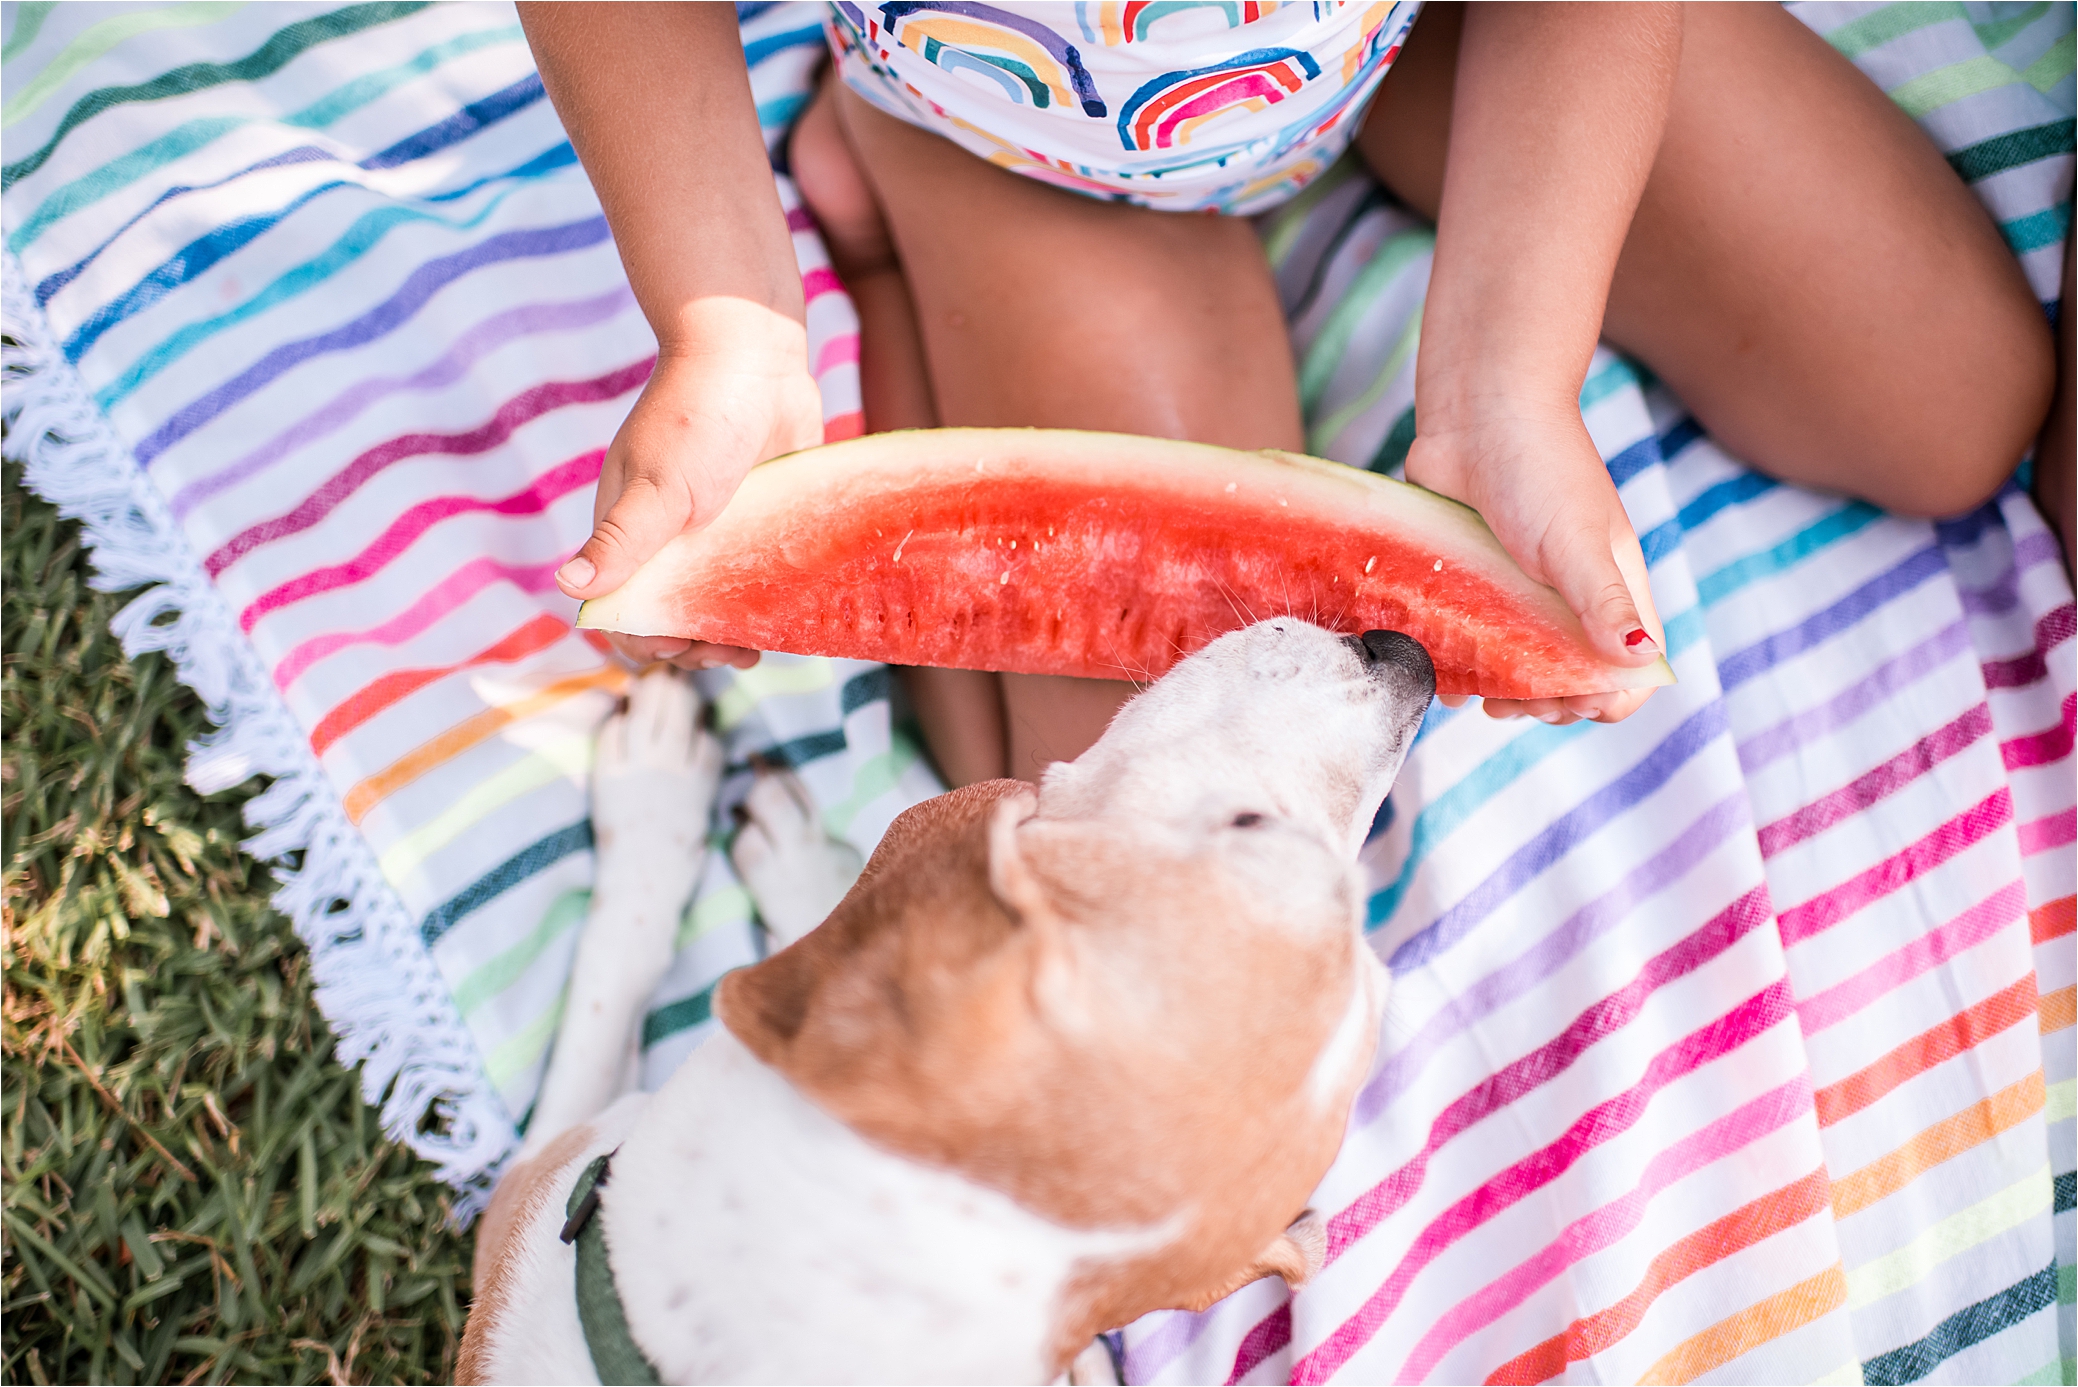 Dog eating watermelon. Rainbow. 